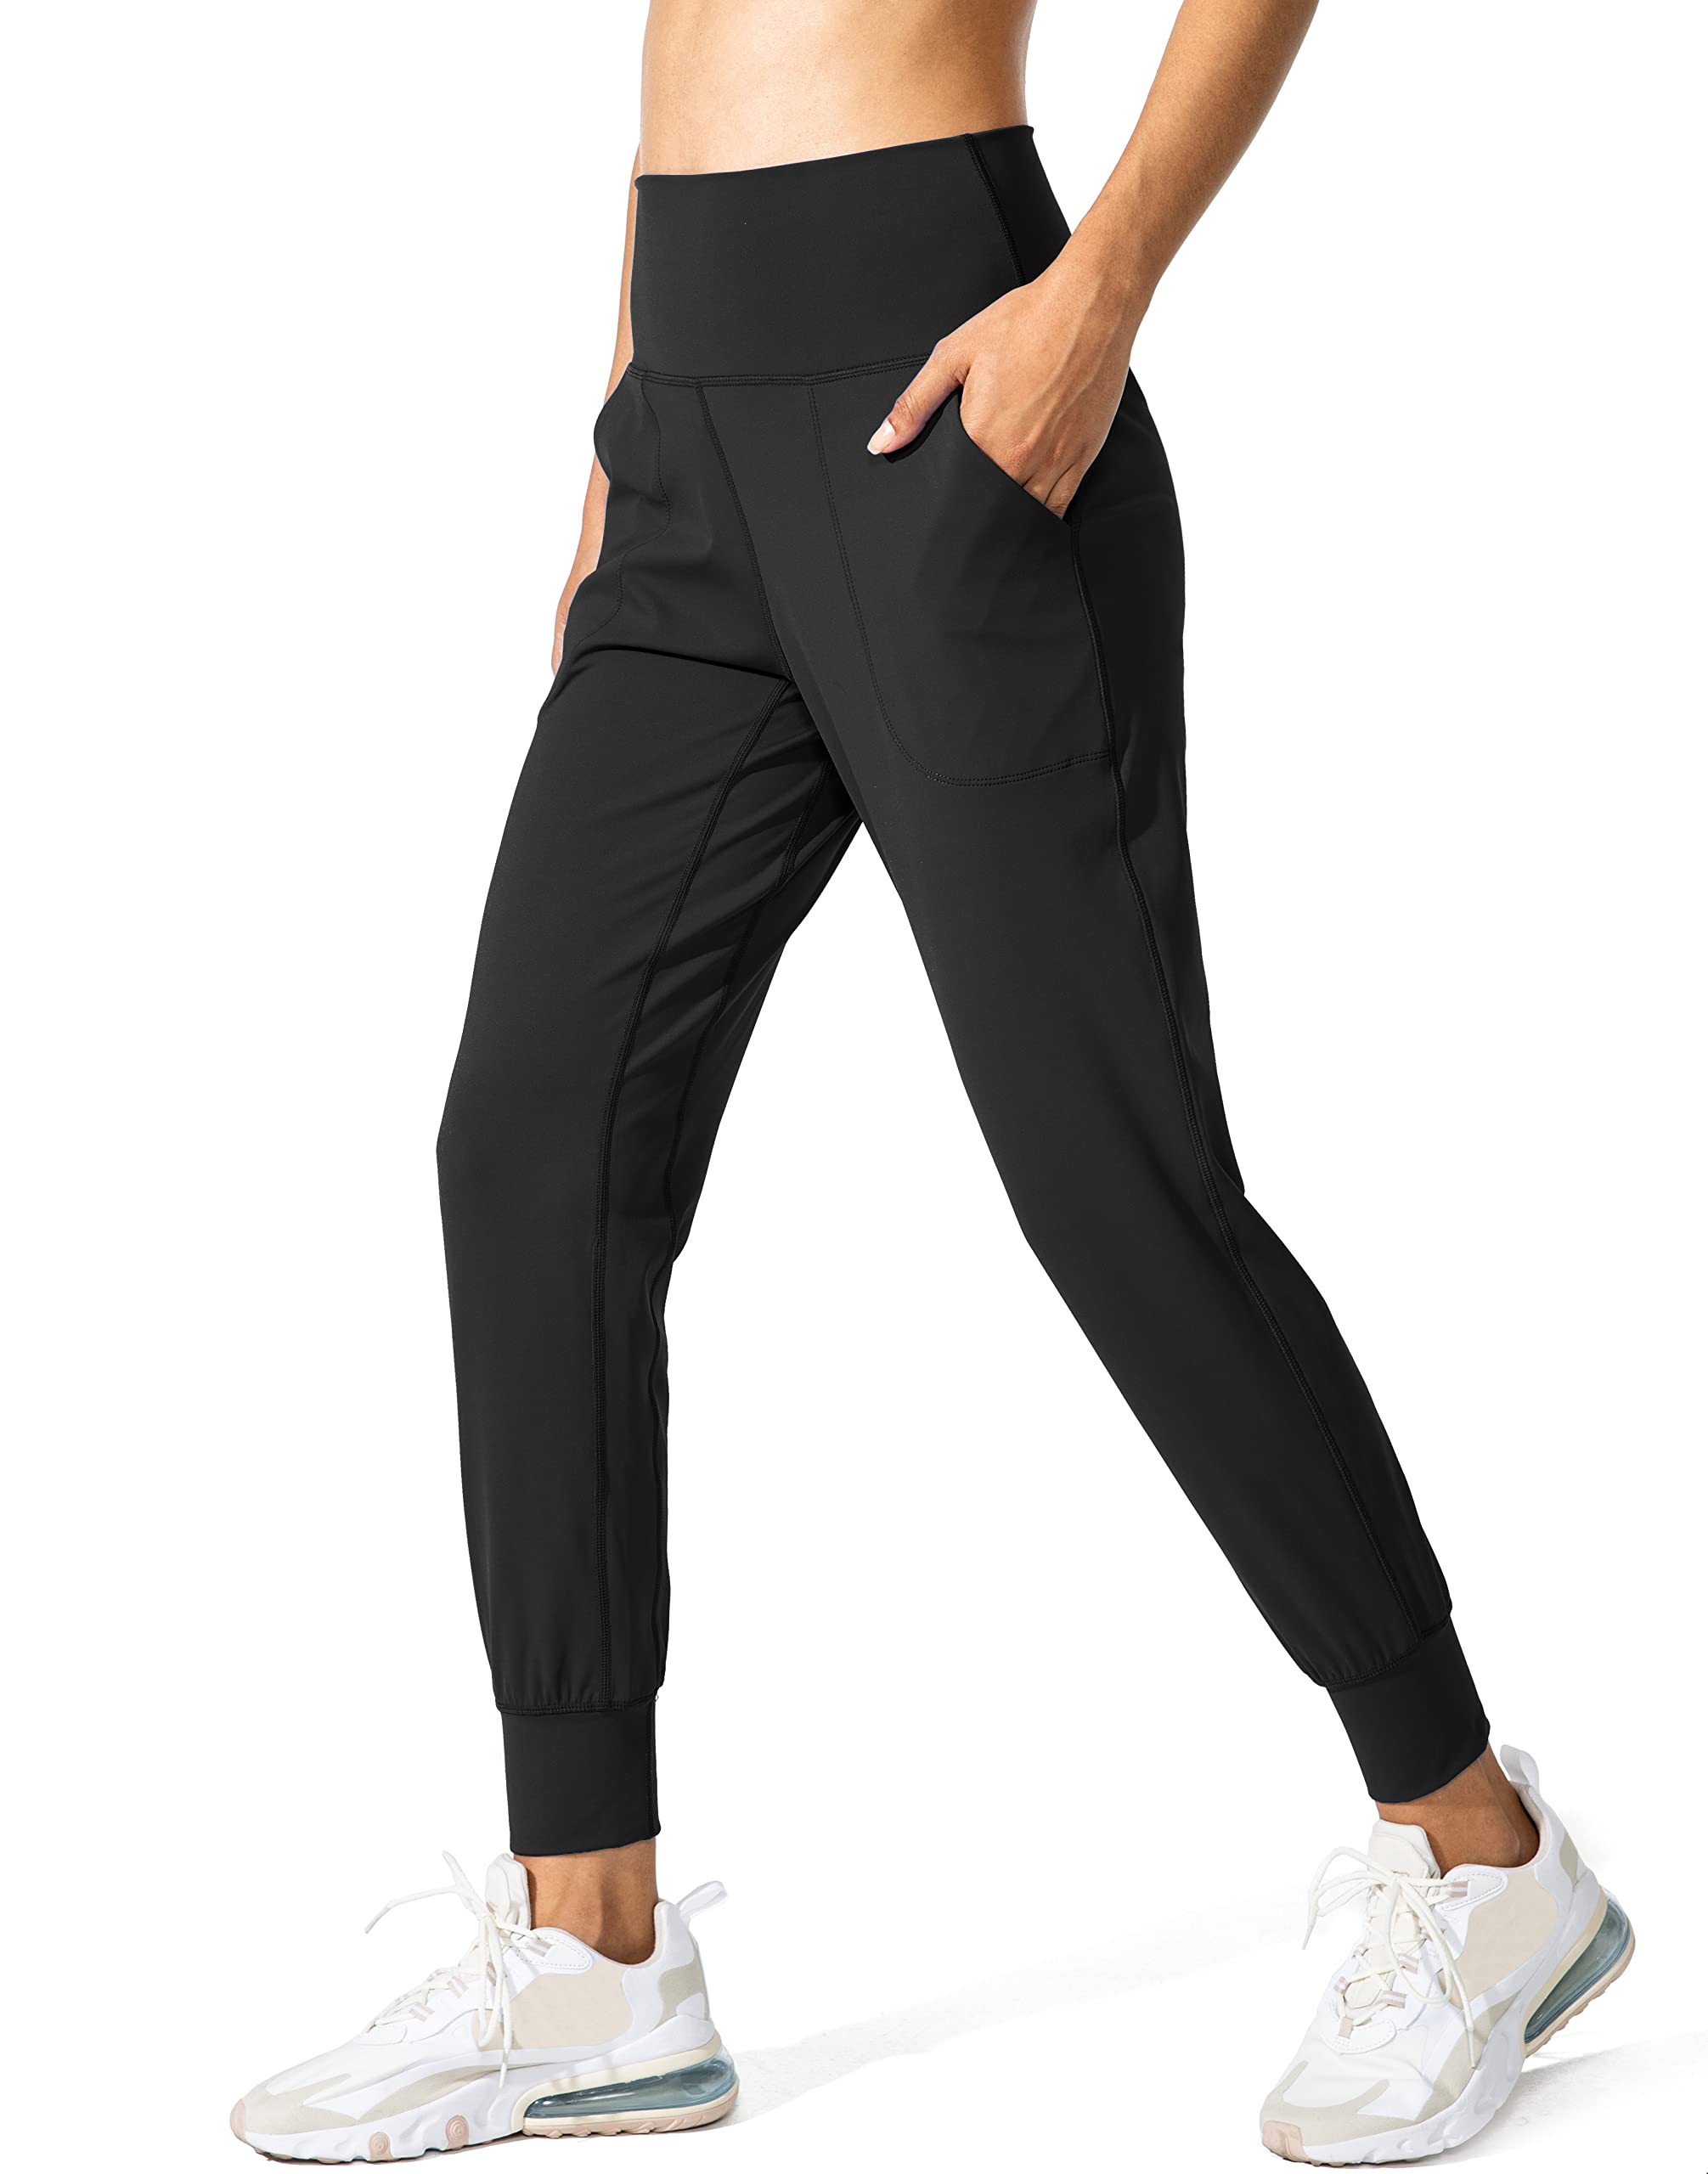 Quick Drying Lu Yoga Yoga Track Pants For Women Loose Fit Leggings